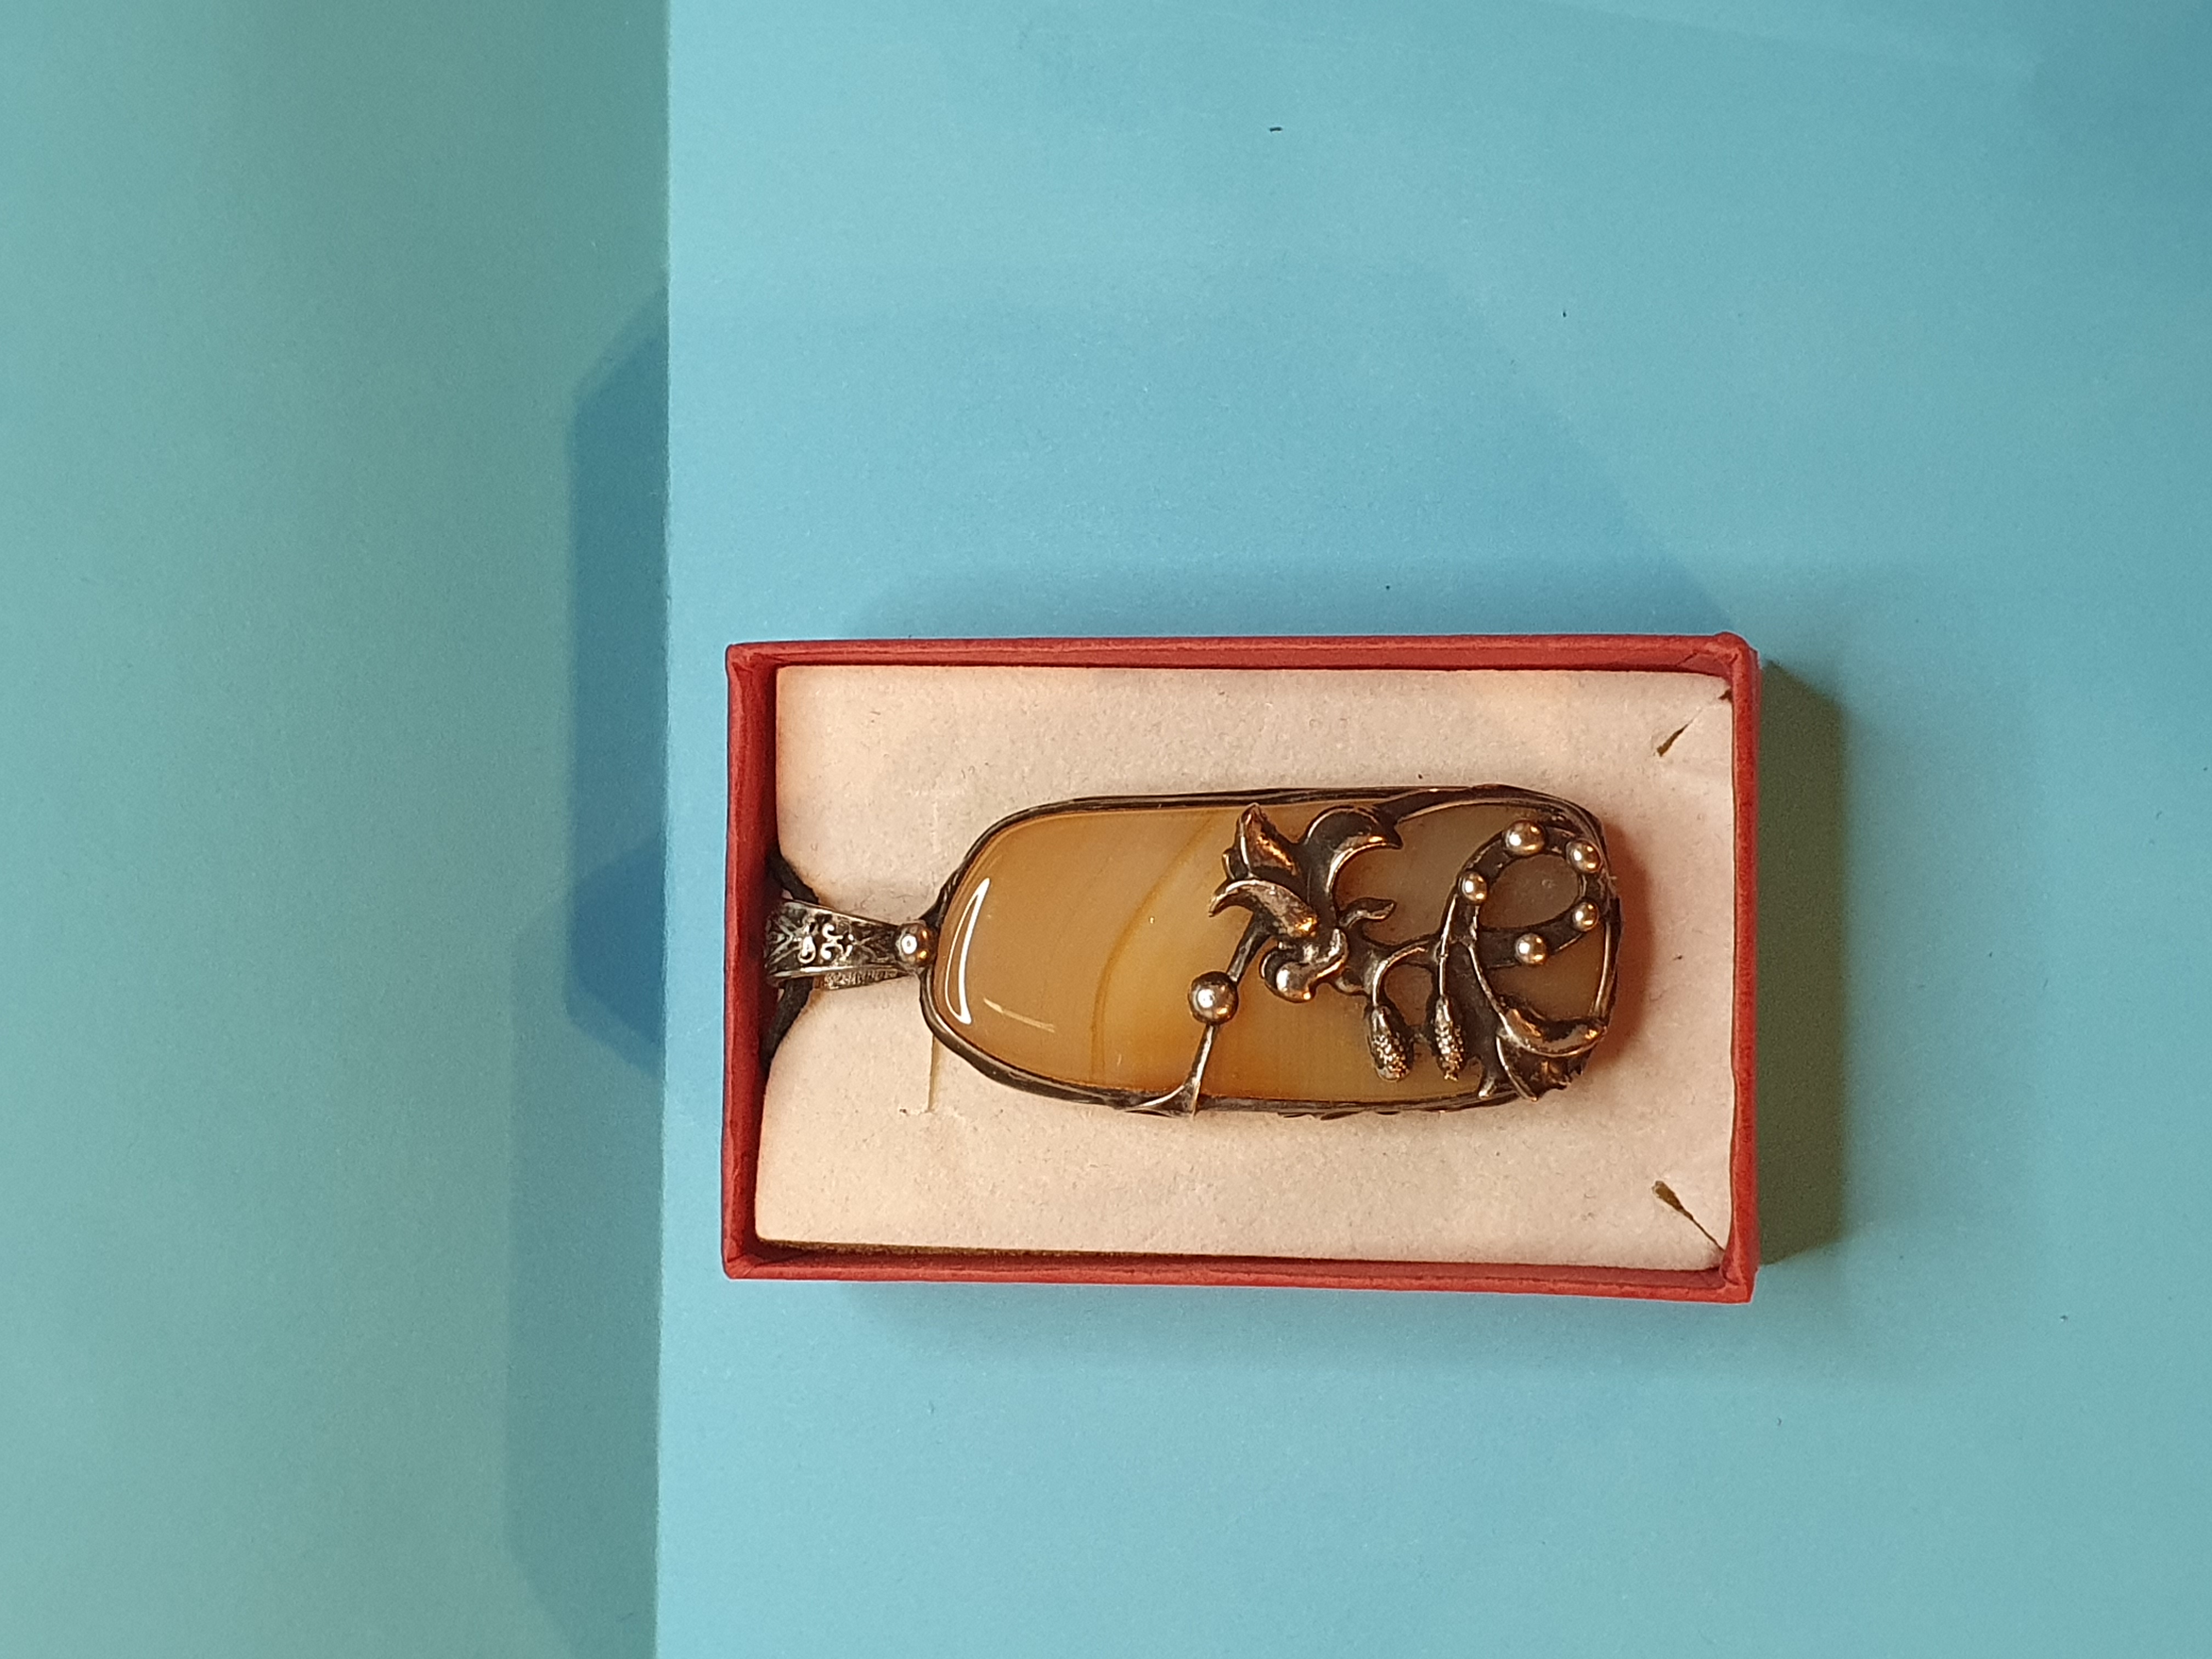 Cínovaný šperk s Achátem. Velikost 6,5 x 2,5 cm. Cena 600 Kč